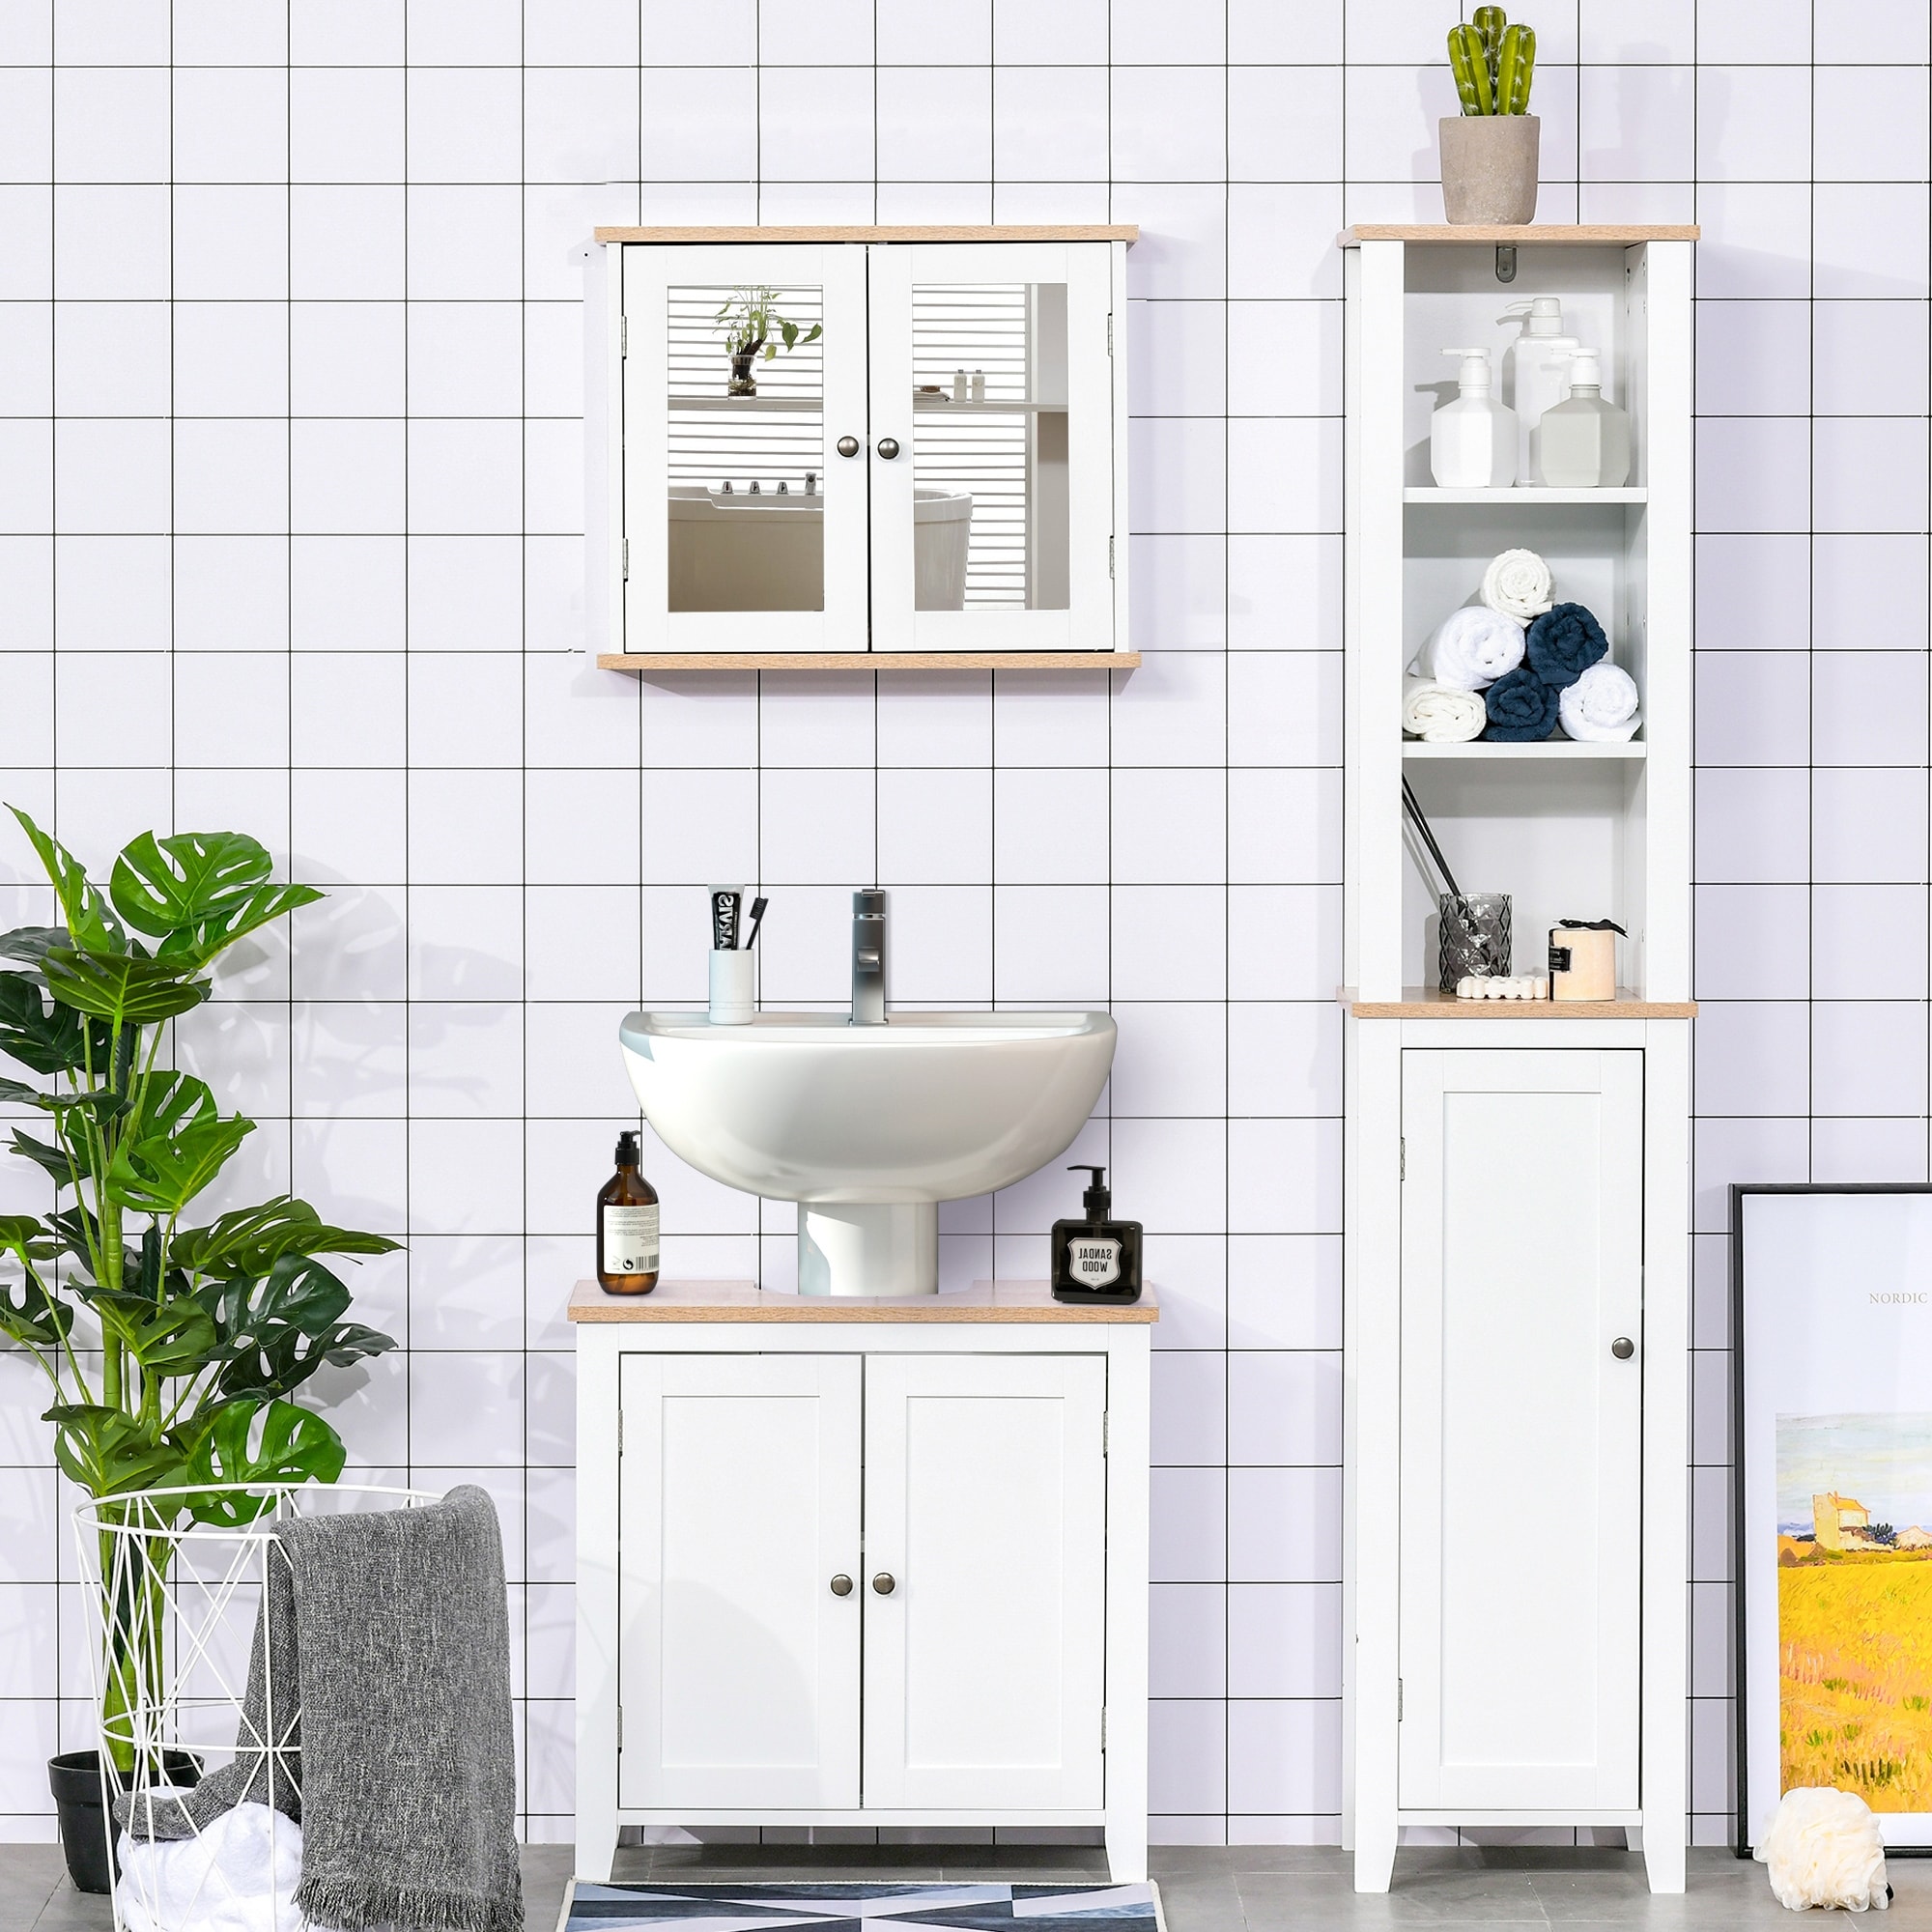 kleankin Bamboo Under Sink Cabinet with 2 Slatted Doors, Freestanding Bathroom Sink Cabinet Space Saver Bathroom Organizer, Natural